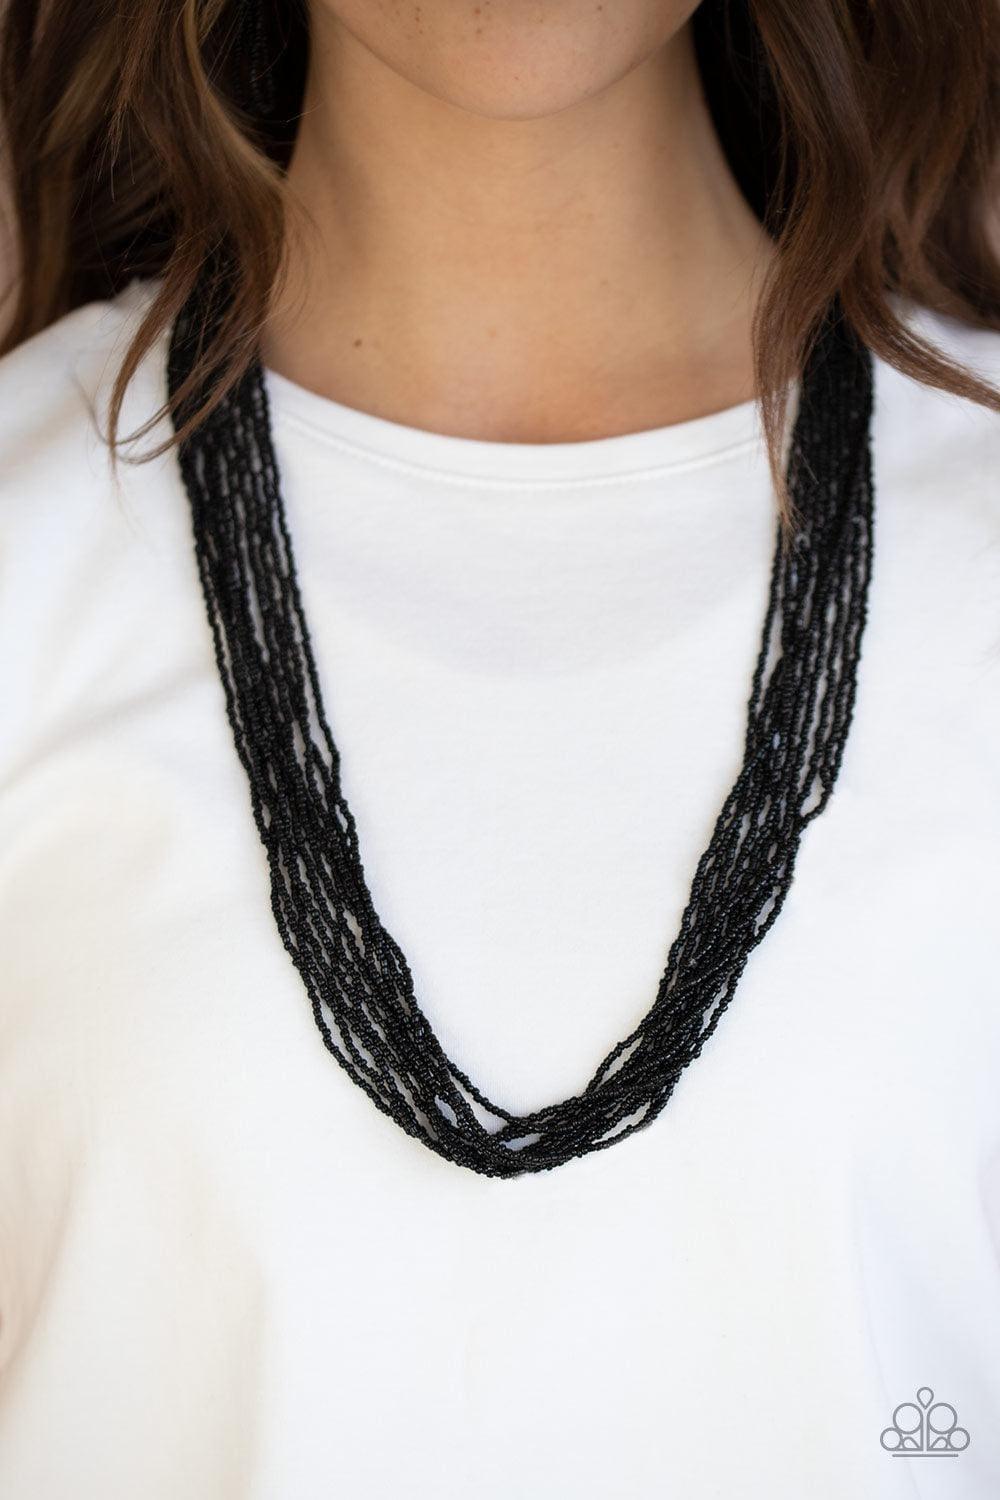 Paparazzi Accessories - Congo Colada - Black Necklace - Bling by JessieK